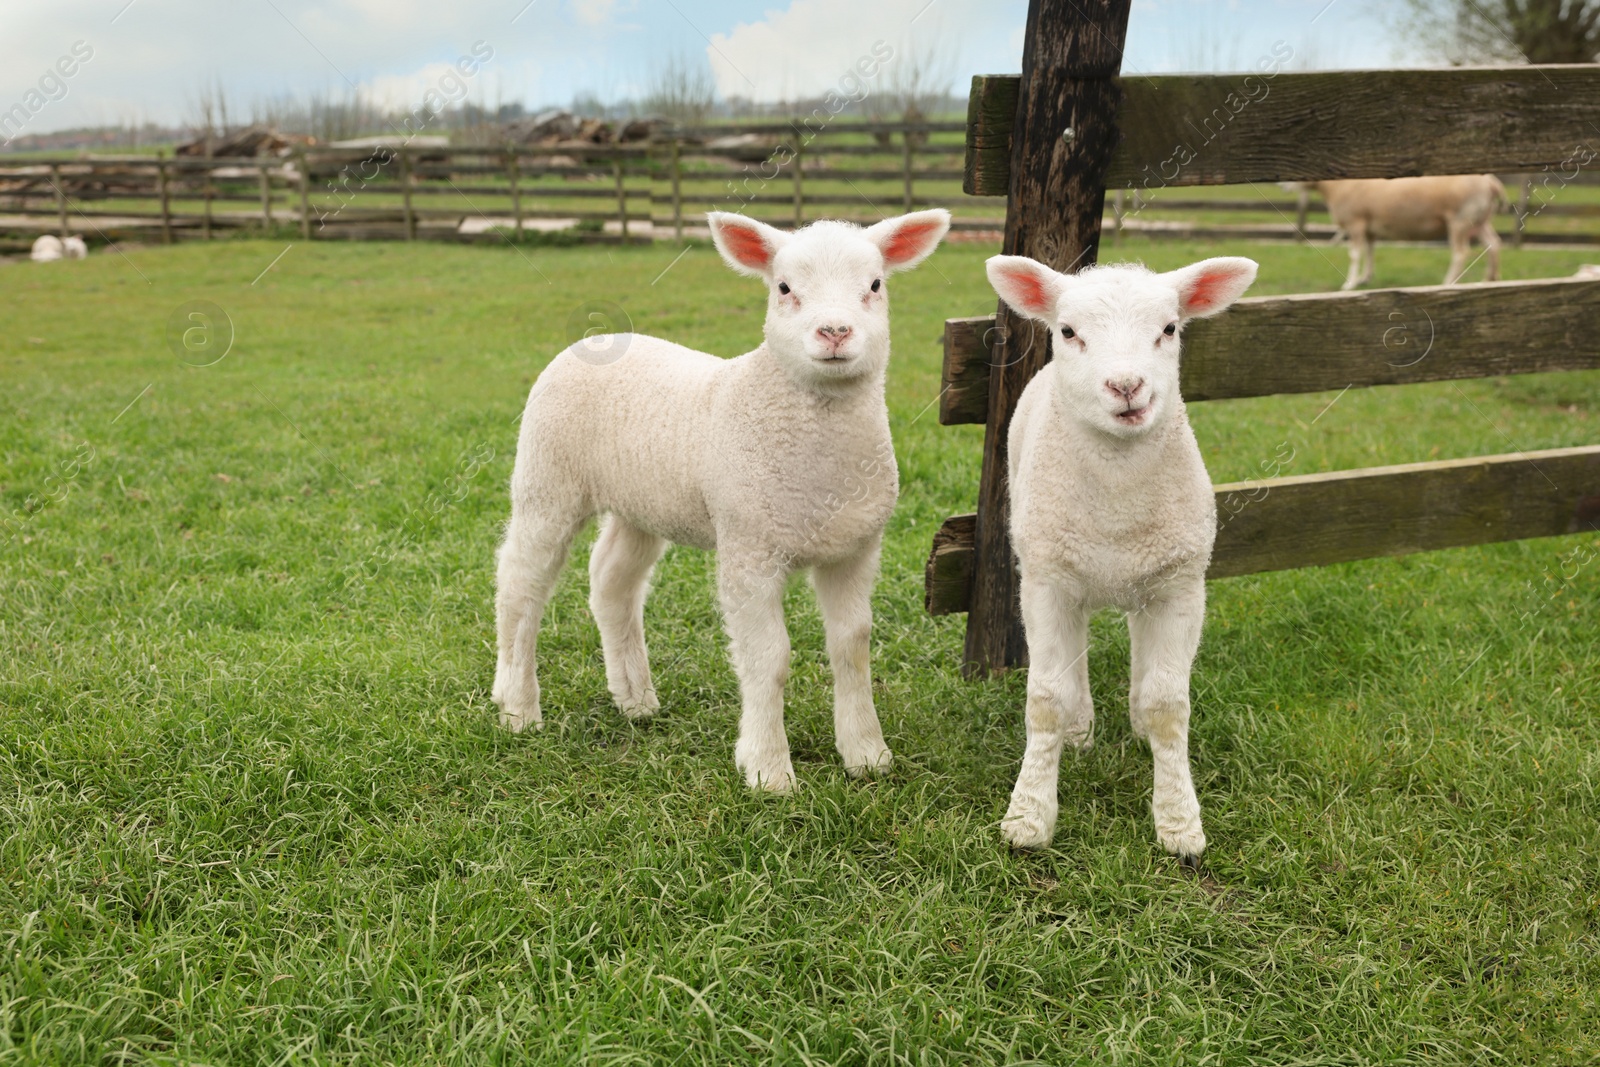 Photo of Cute lambs near wooden fence on green field